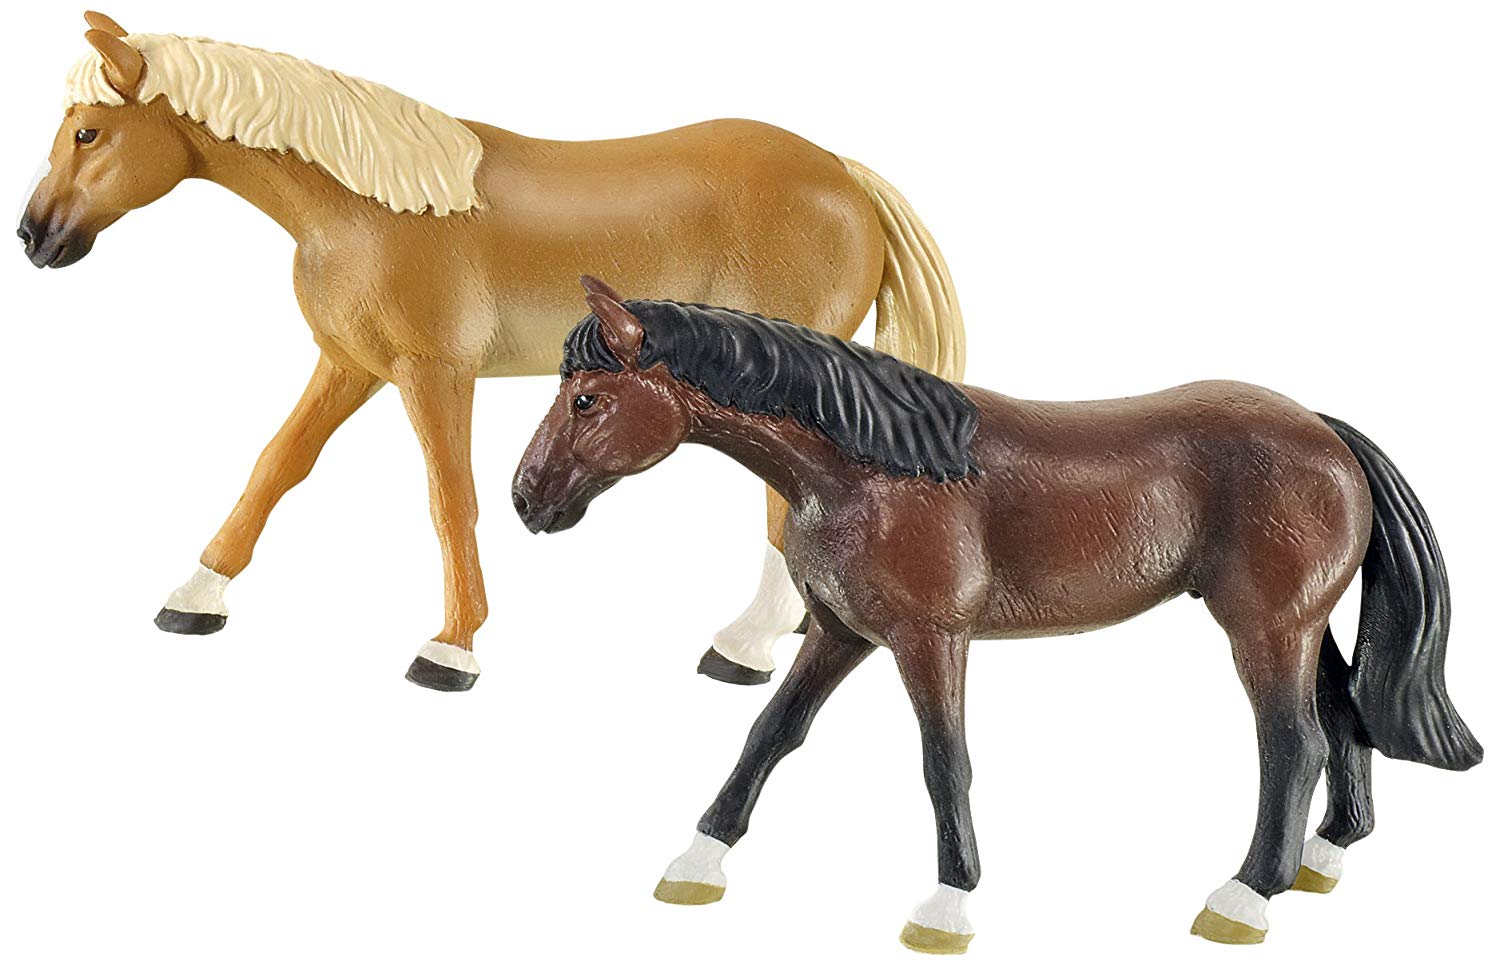 Siku 2491 Horse Models Set Of 2 Scale 1:32 Assorted Colours